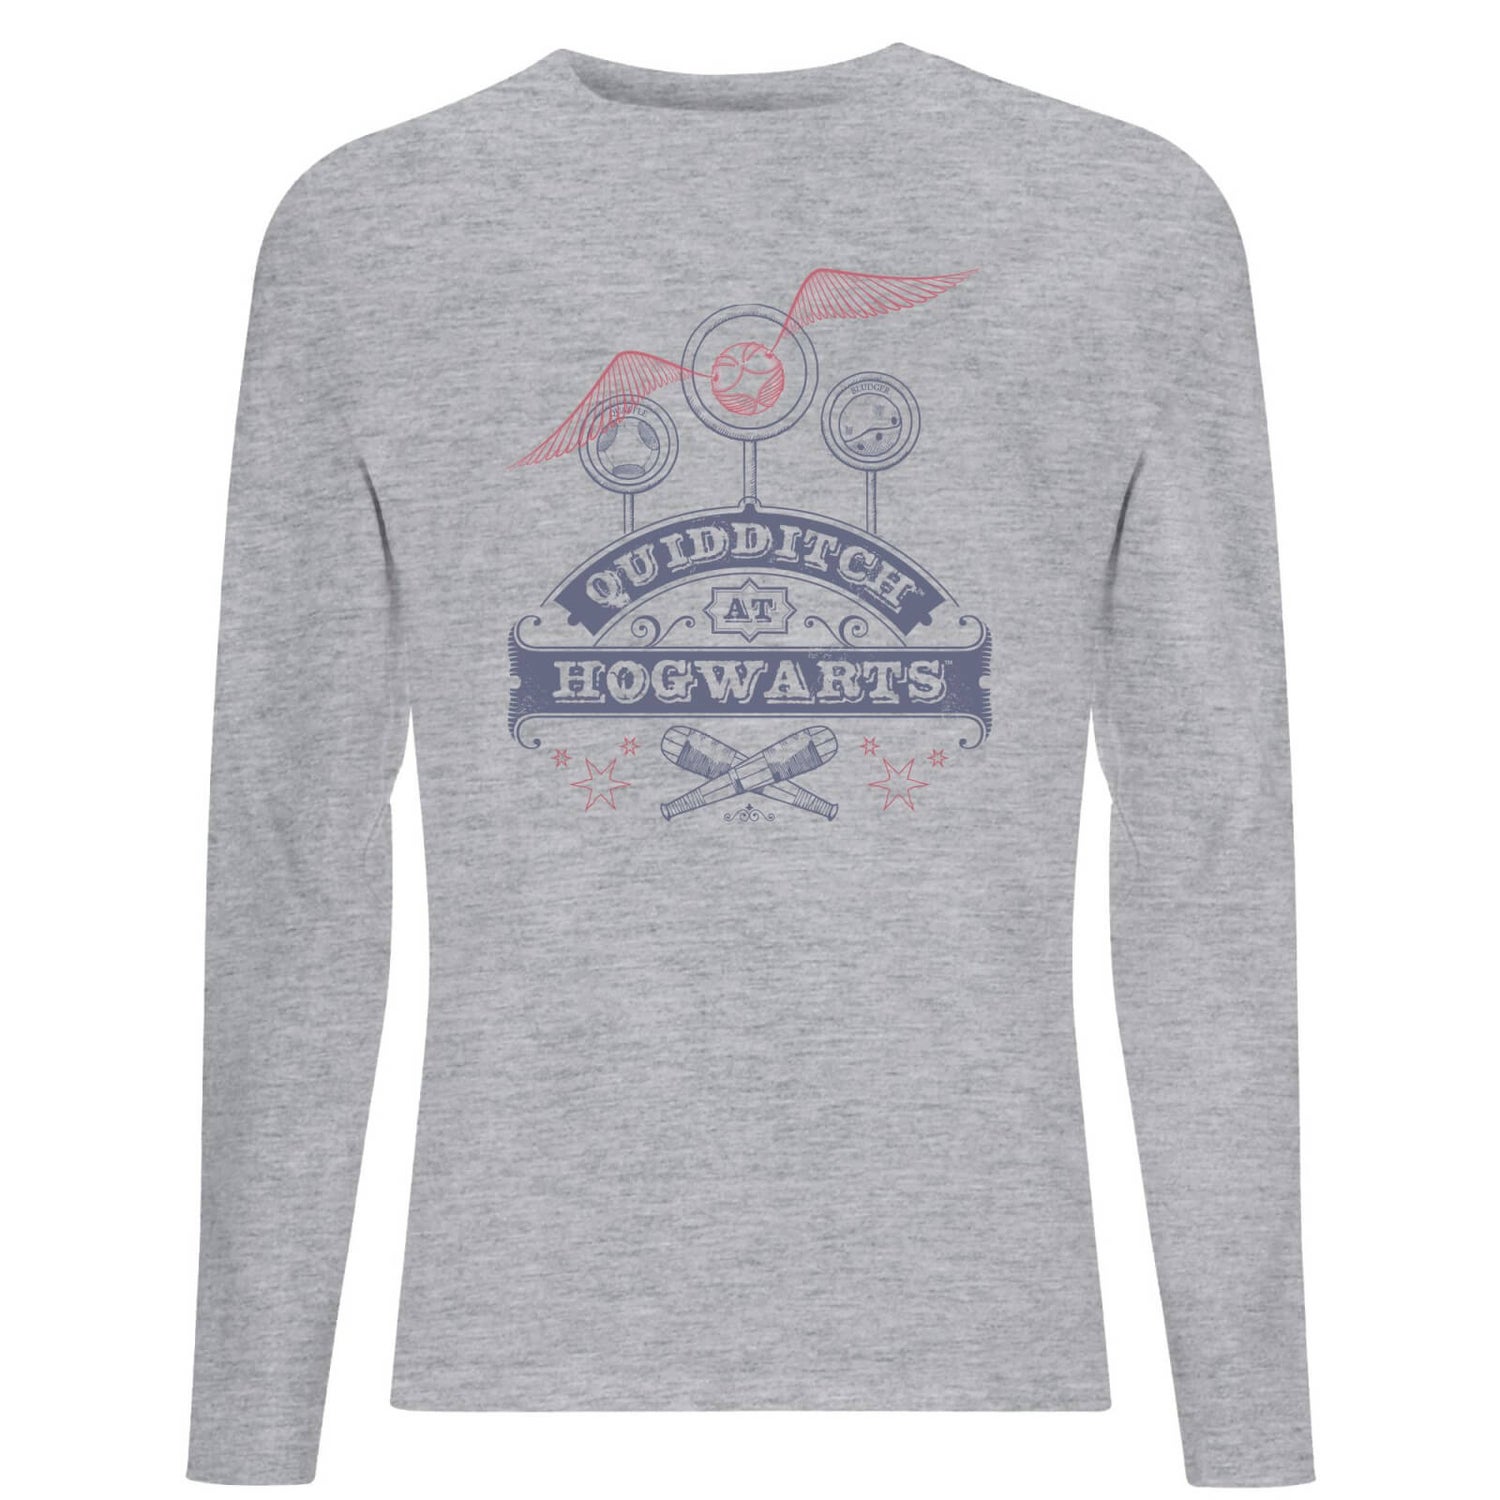 Harry Potter Quidditch At Hogwarts Men's Long Sleeve T-Shirt - Grey